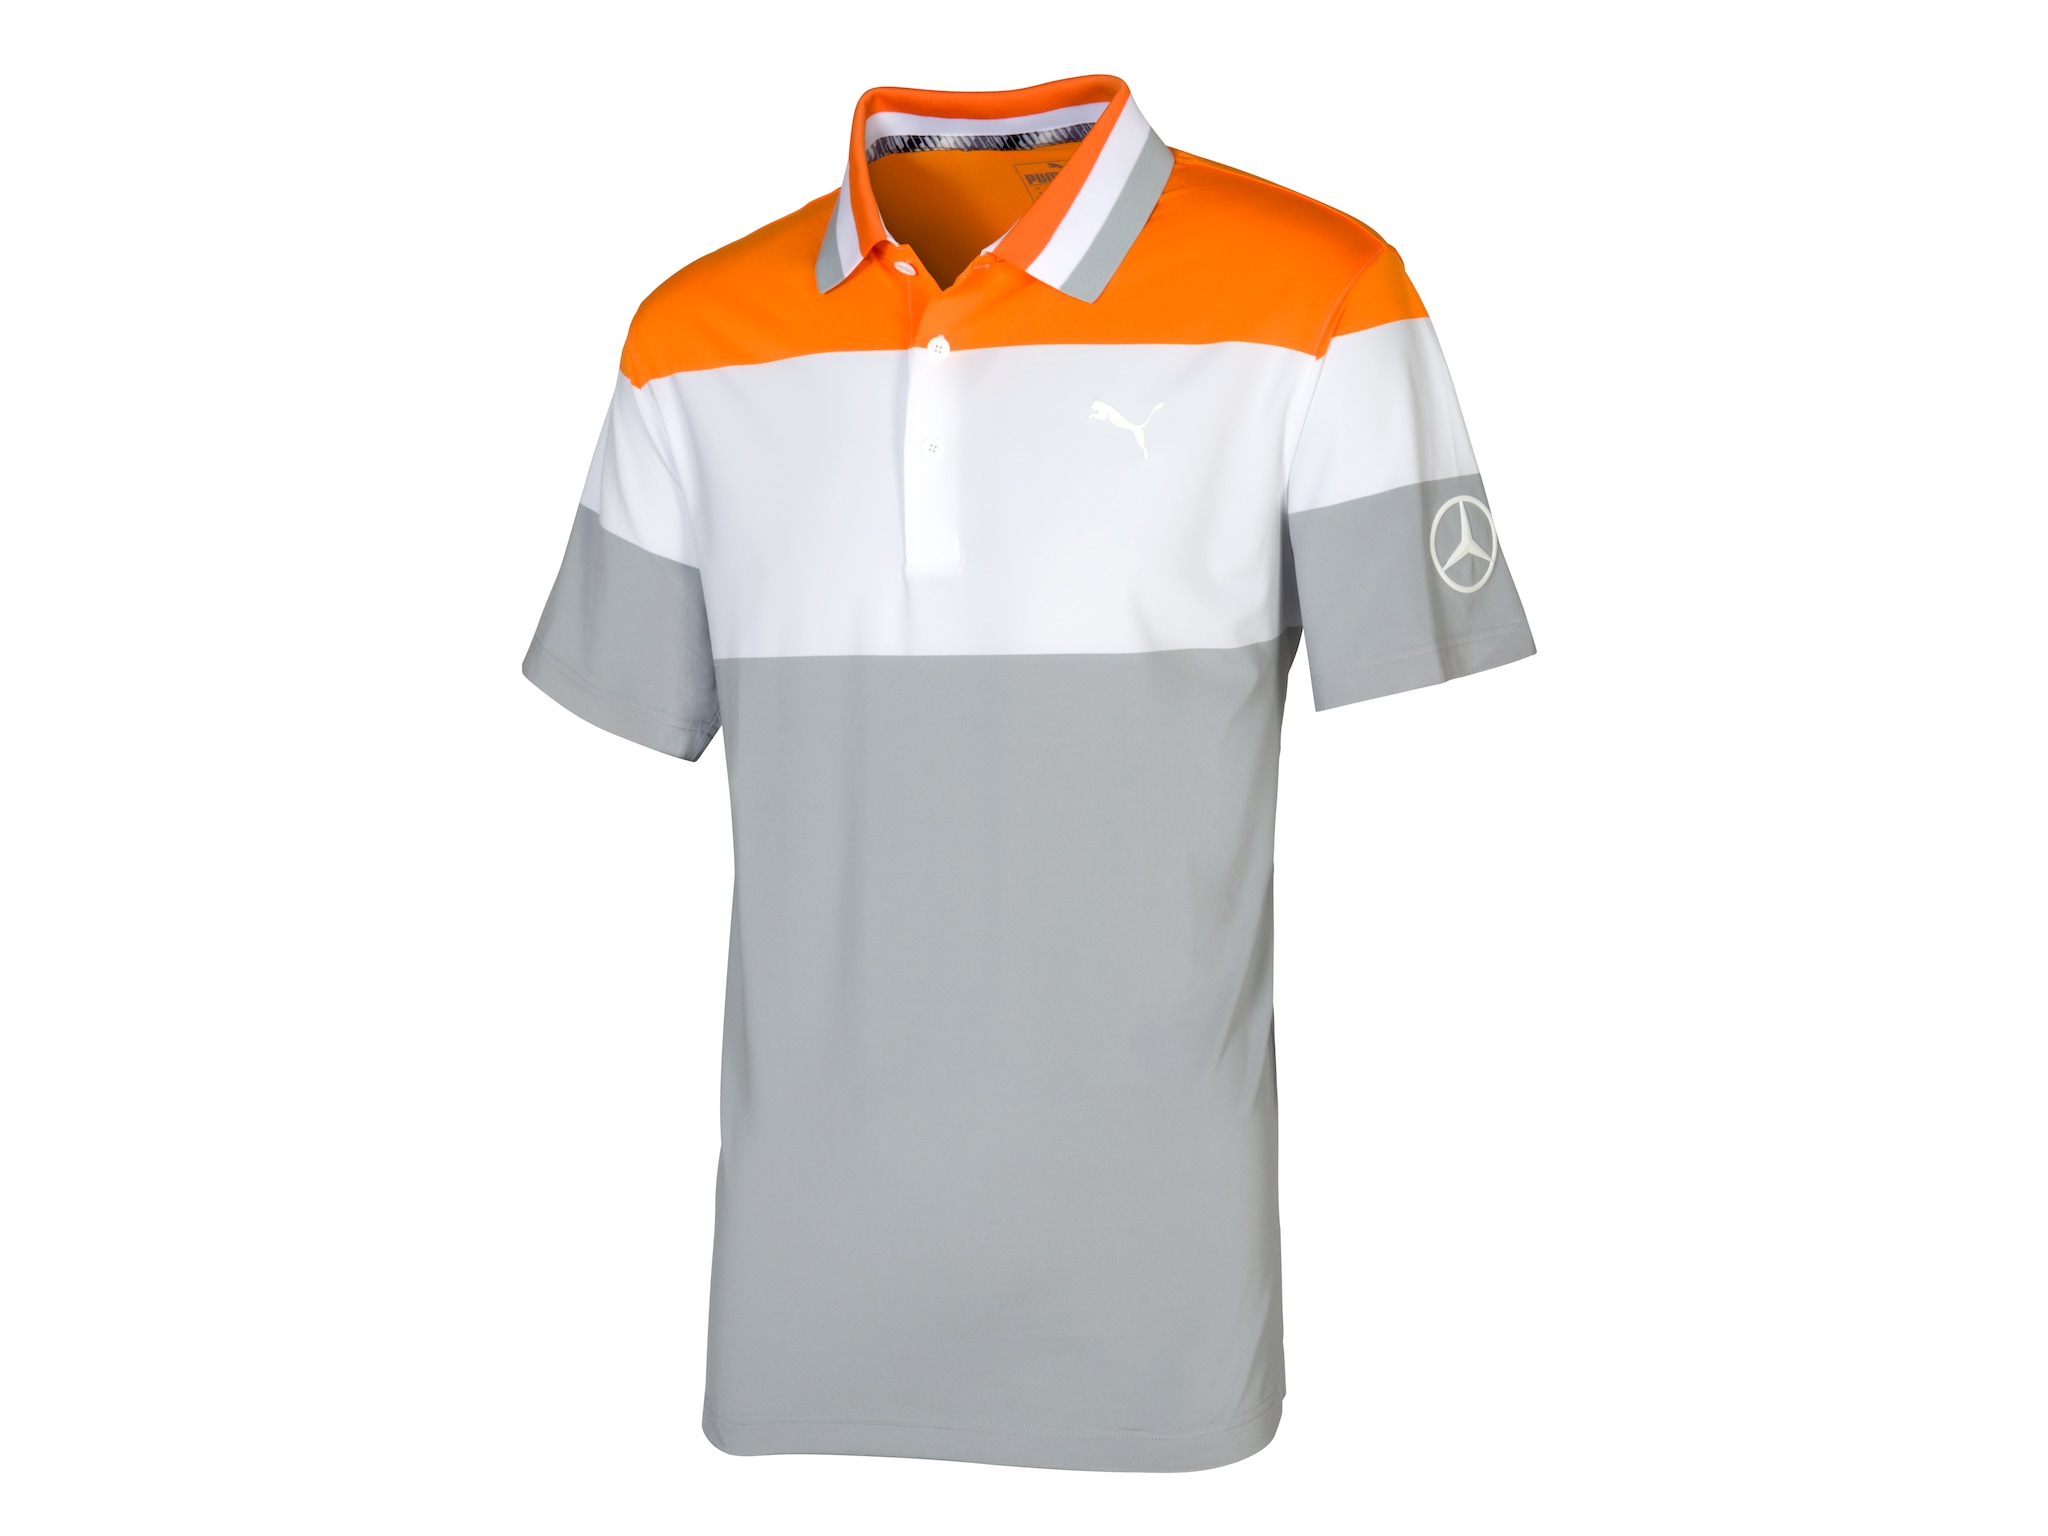 Golf-Poloshirt Herren - orange/grau/weiß, XXL